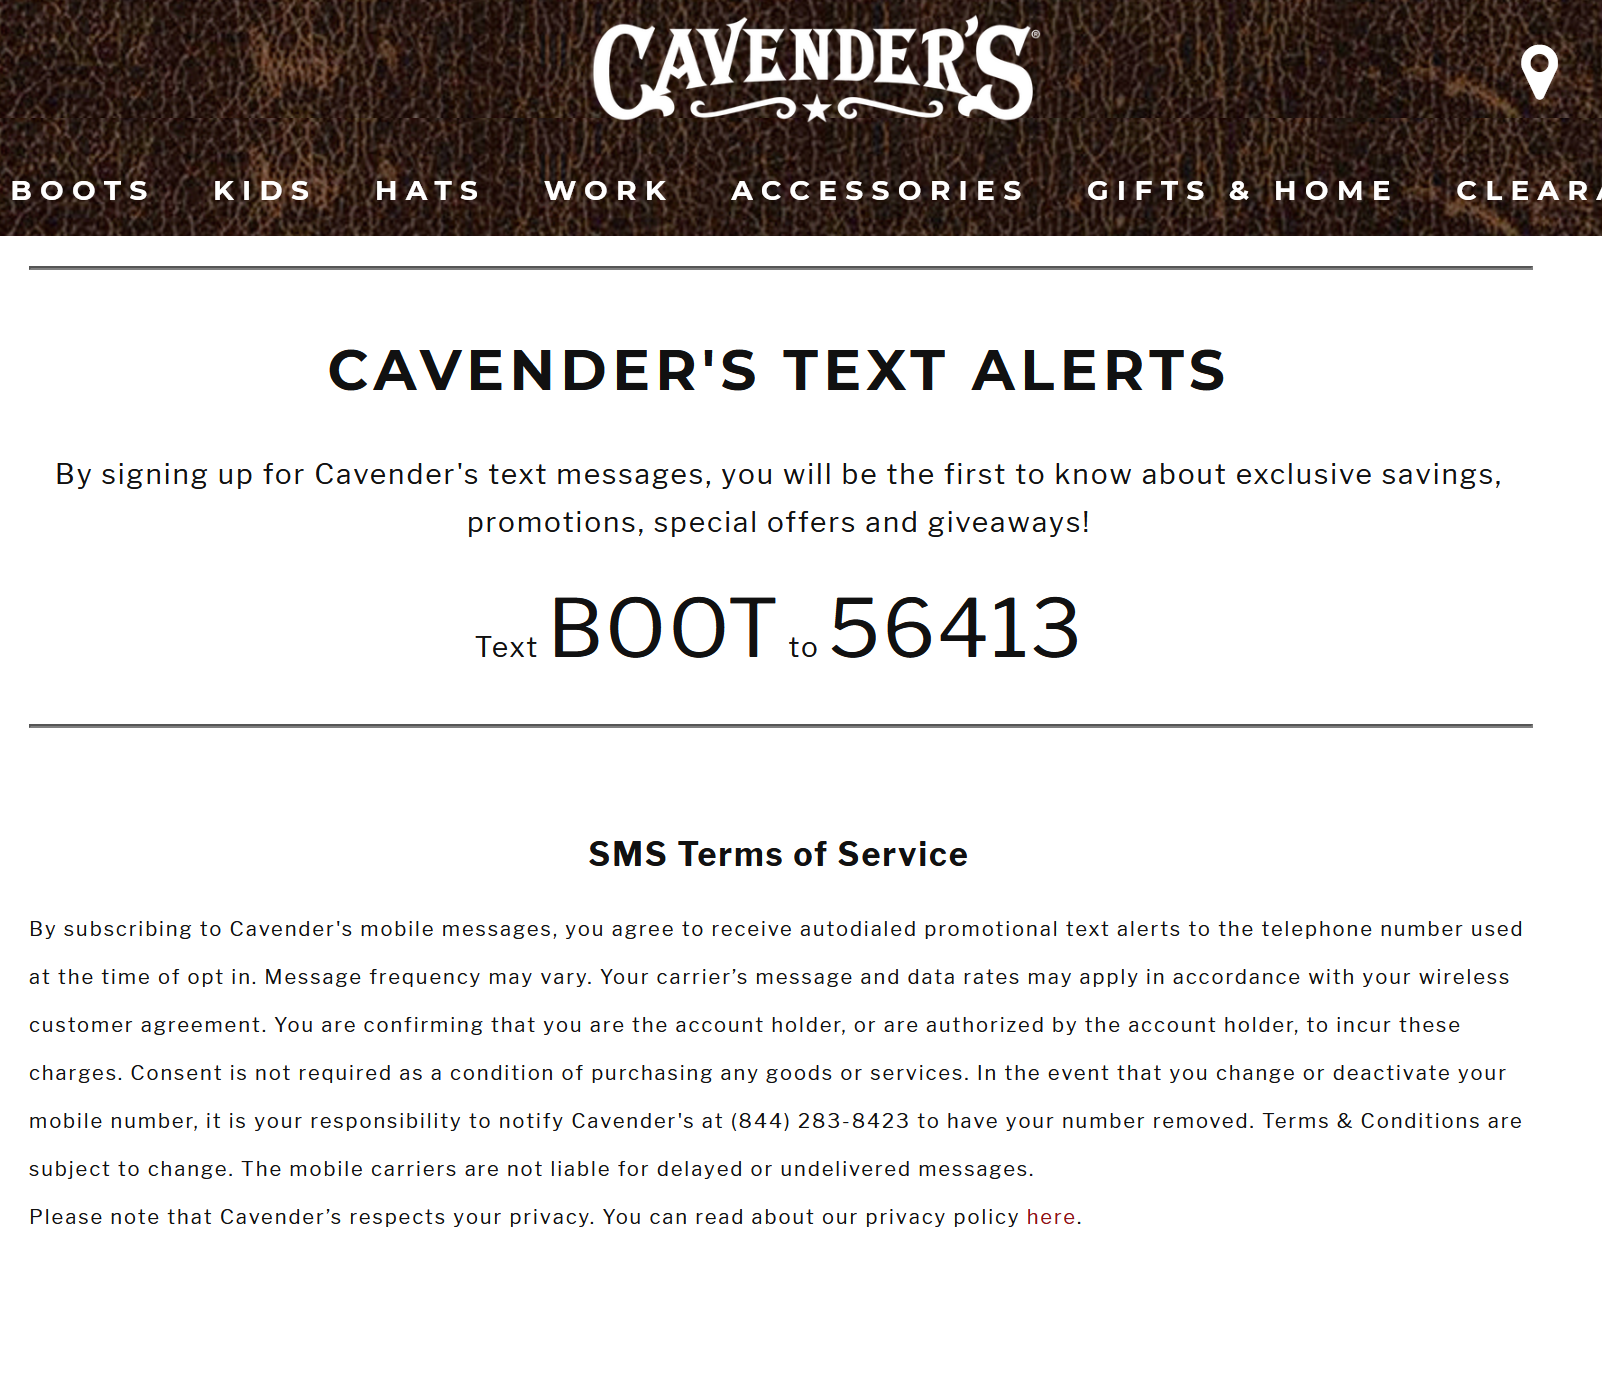 Short Code Cavender Investment Properties, Ltd text messaging